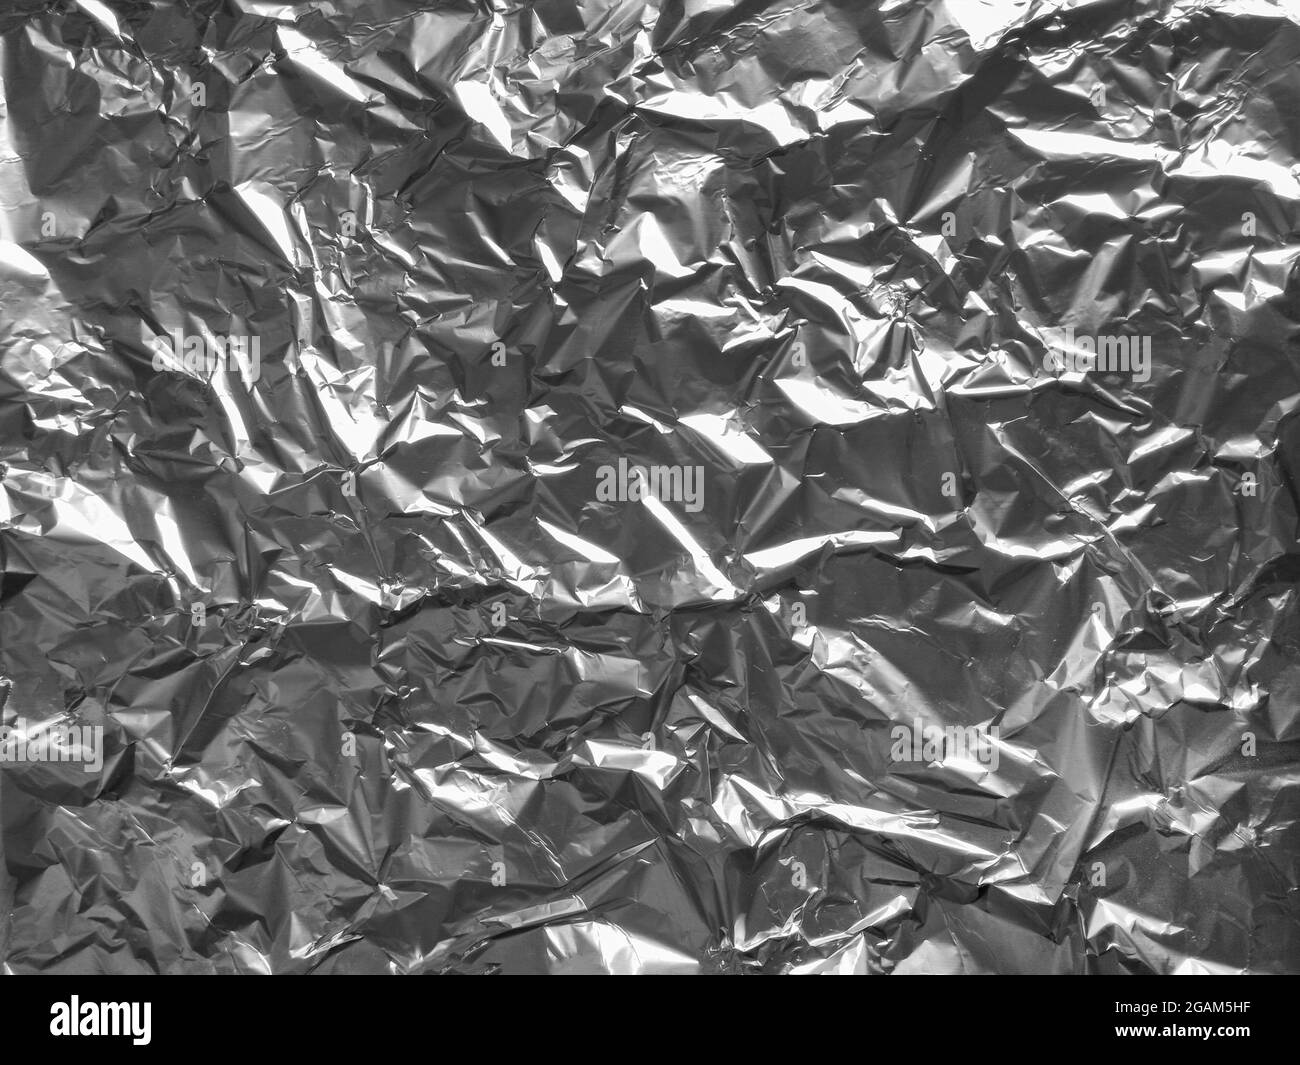 Silver metallic foil Black and White Stock Photos & Images - Alamy